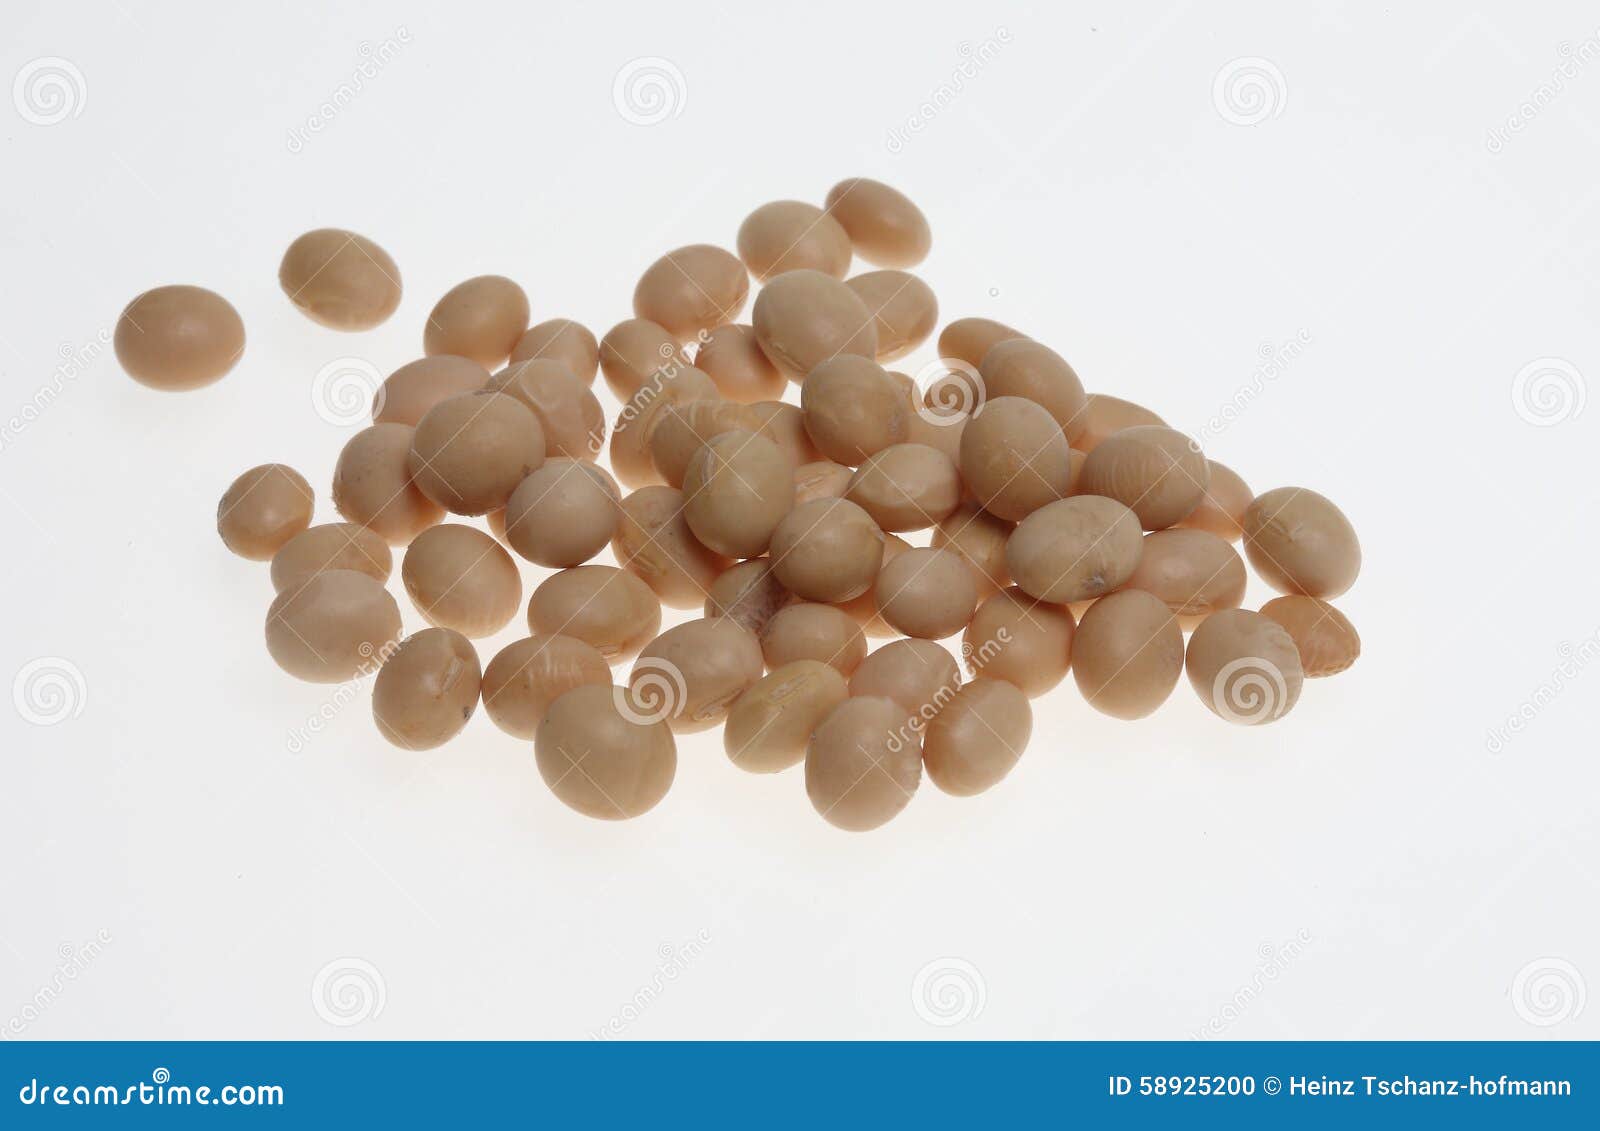 Soybean, Glycine max stock photo. Image of legumes, legume - 58925200